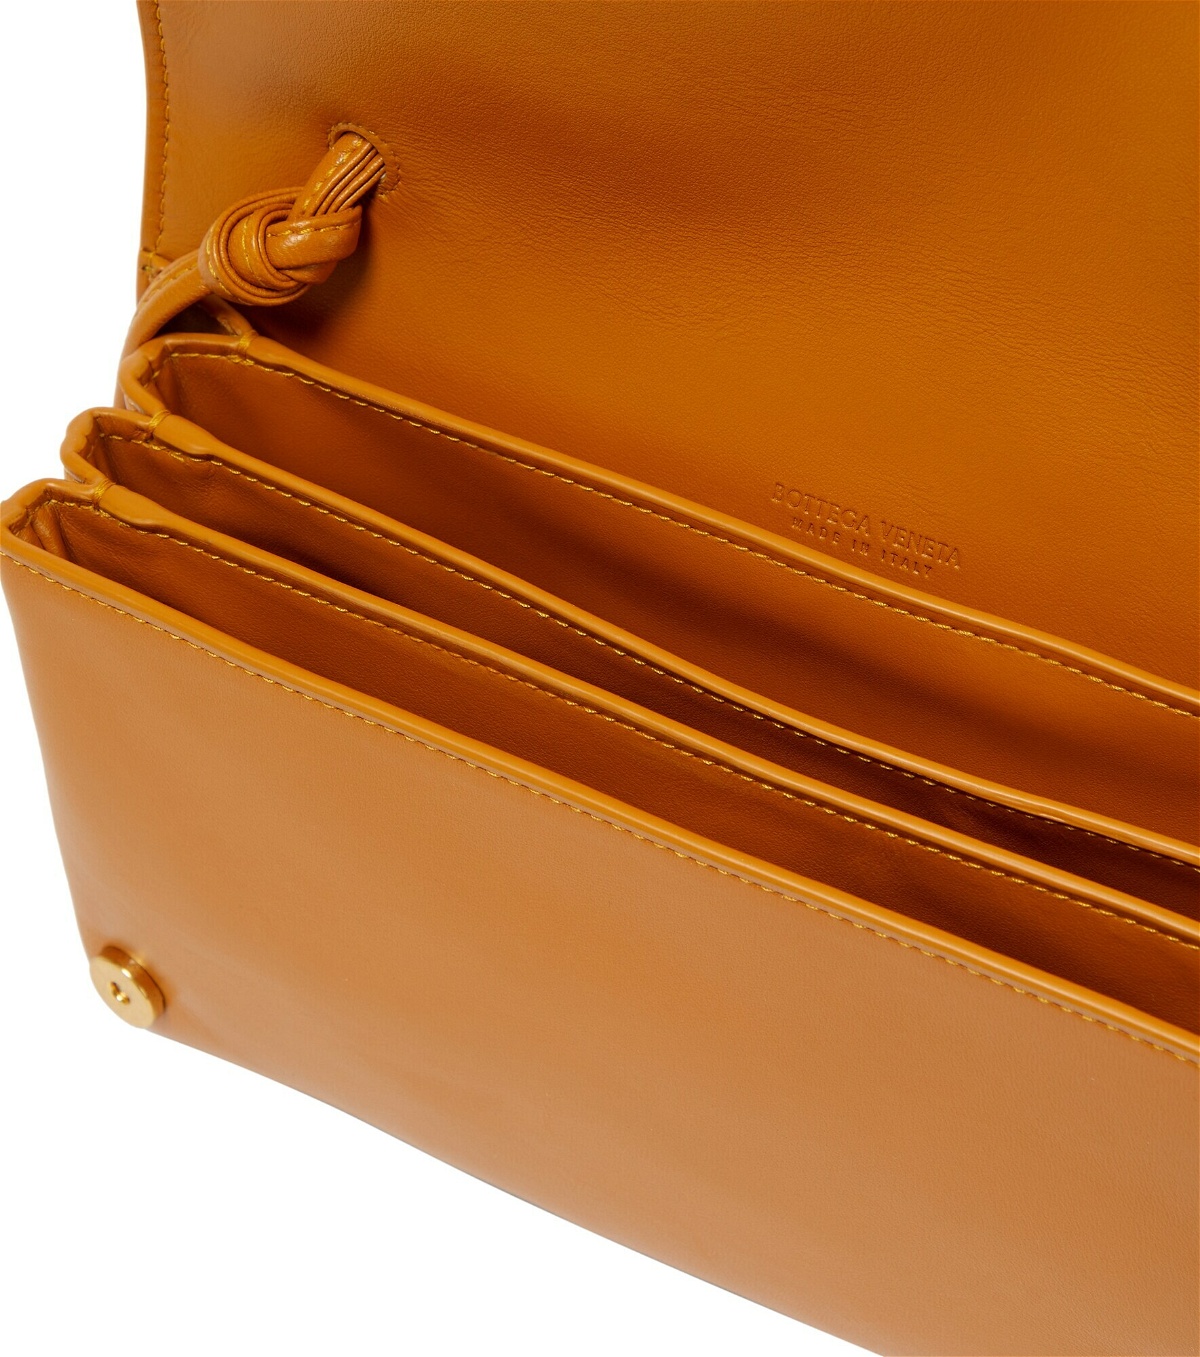 Bottega Veneta Trio Pouch Intrecciato Leather Shoulder Bag